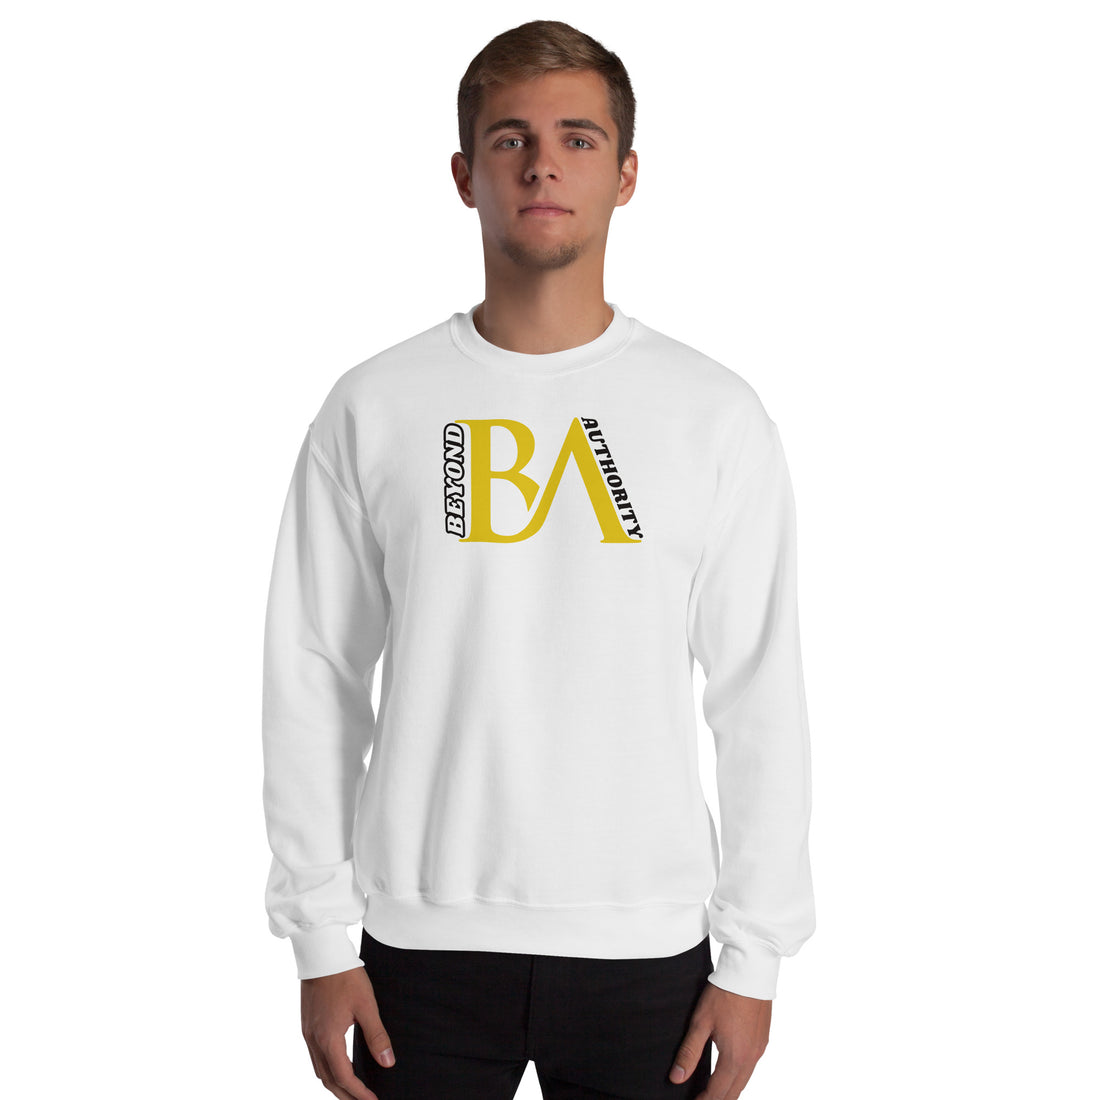 Unisex Premium Sweatshirt | Premium Sweatshirt | Beyond Authority